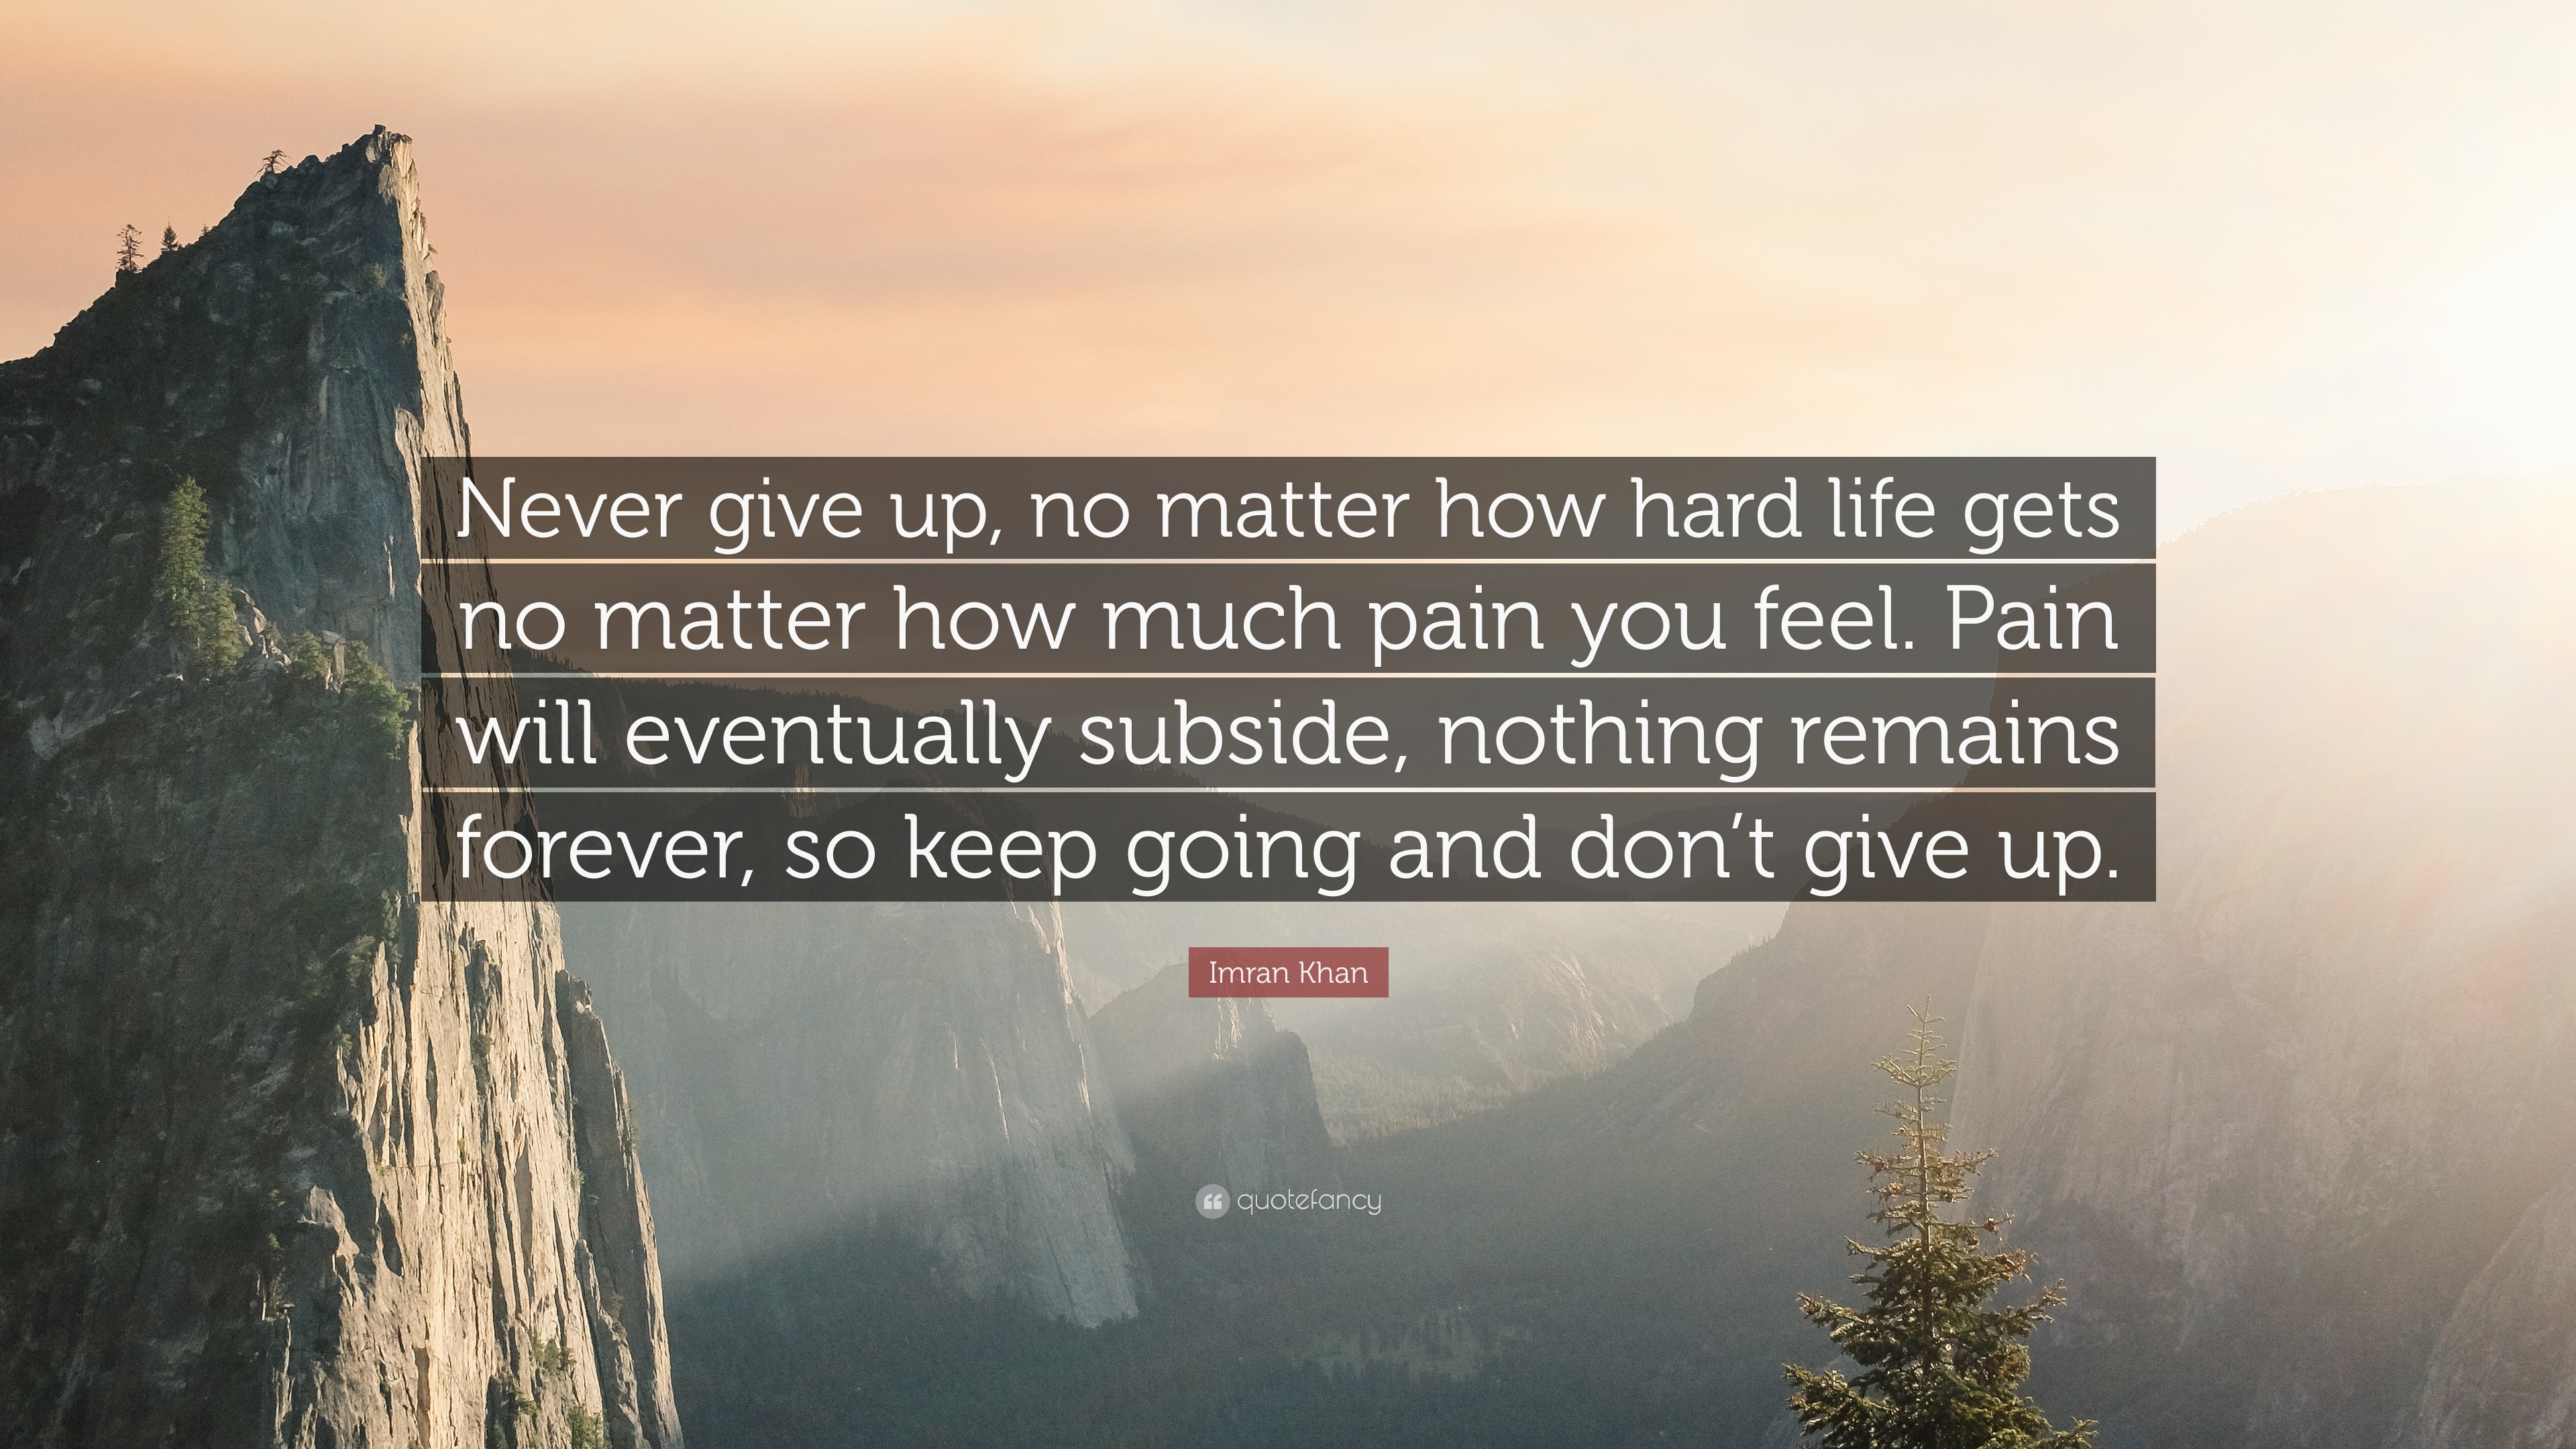 Imran Khan Quote “Never give up no matter how hard life s no